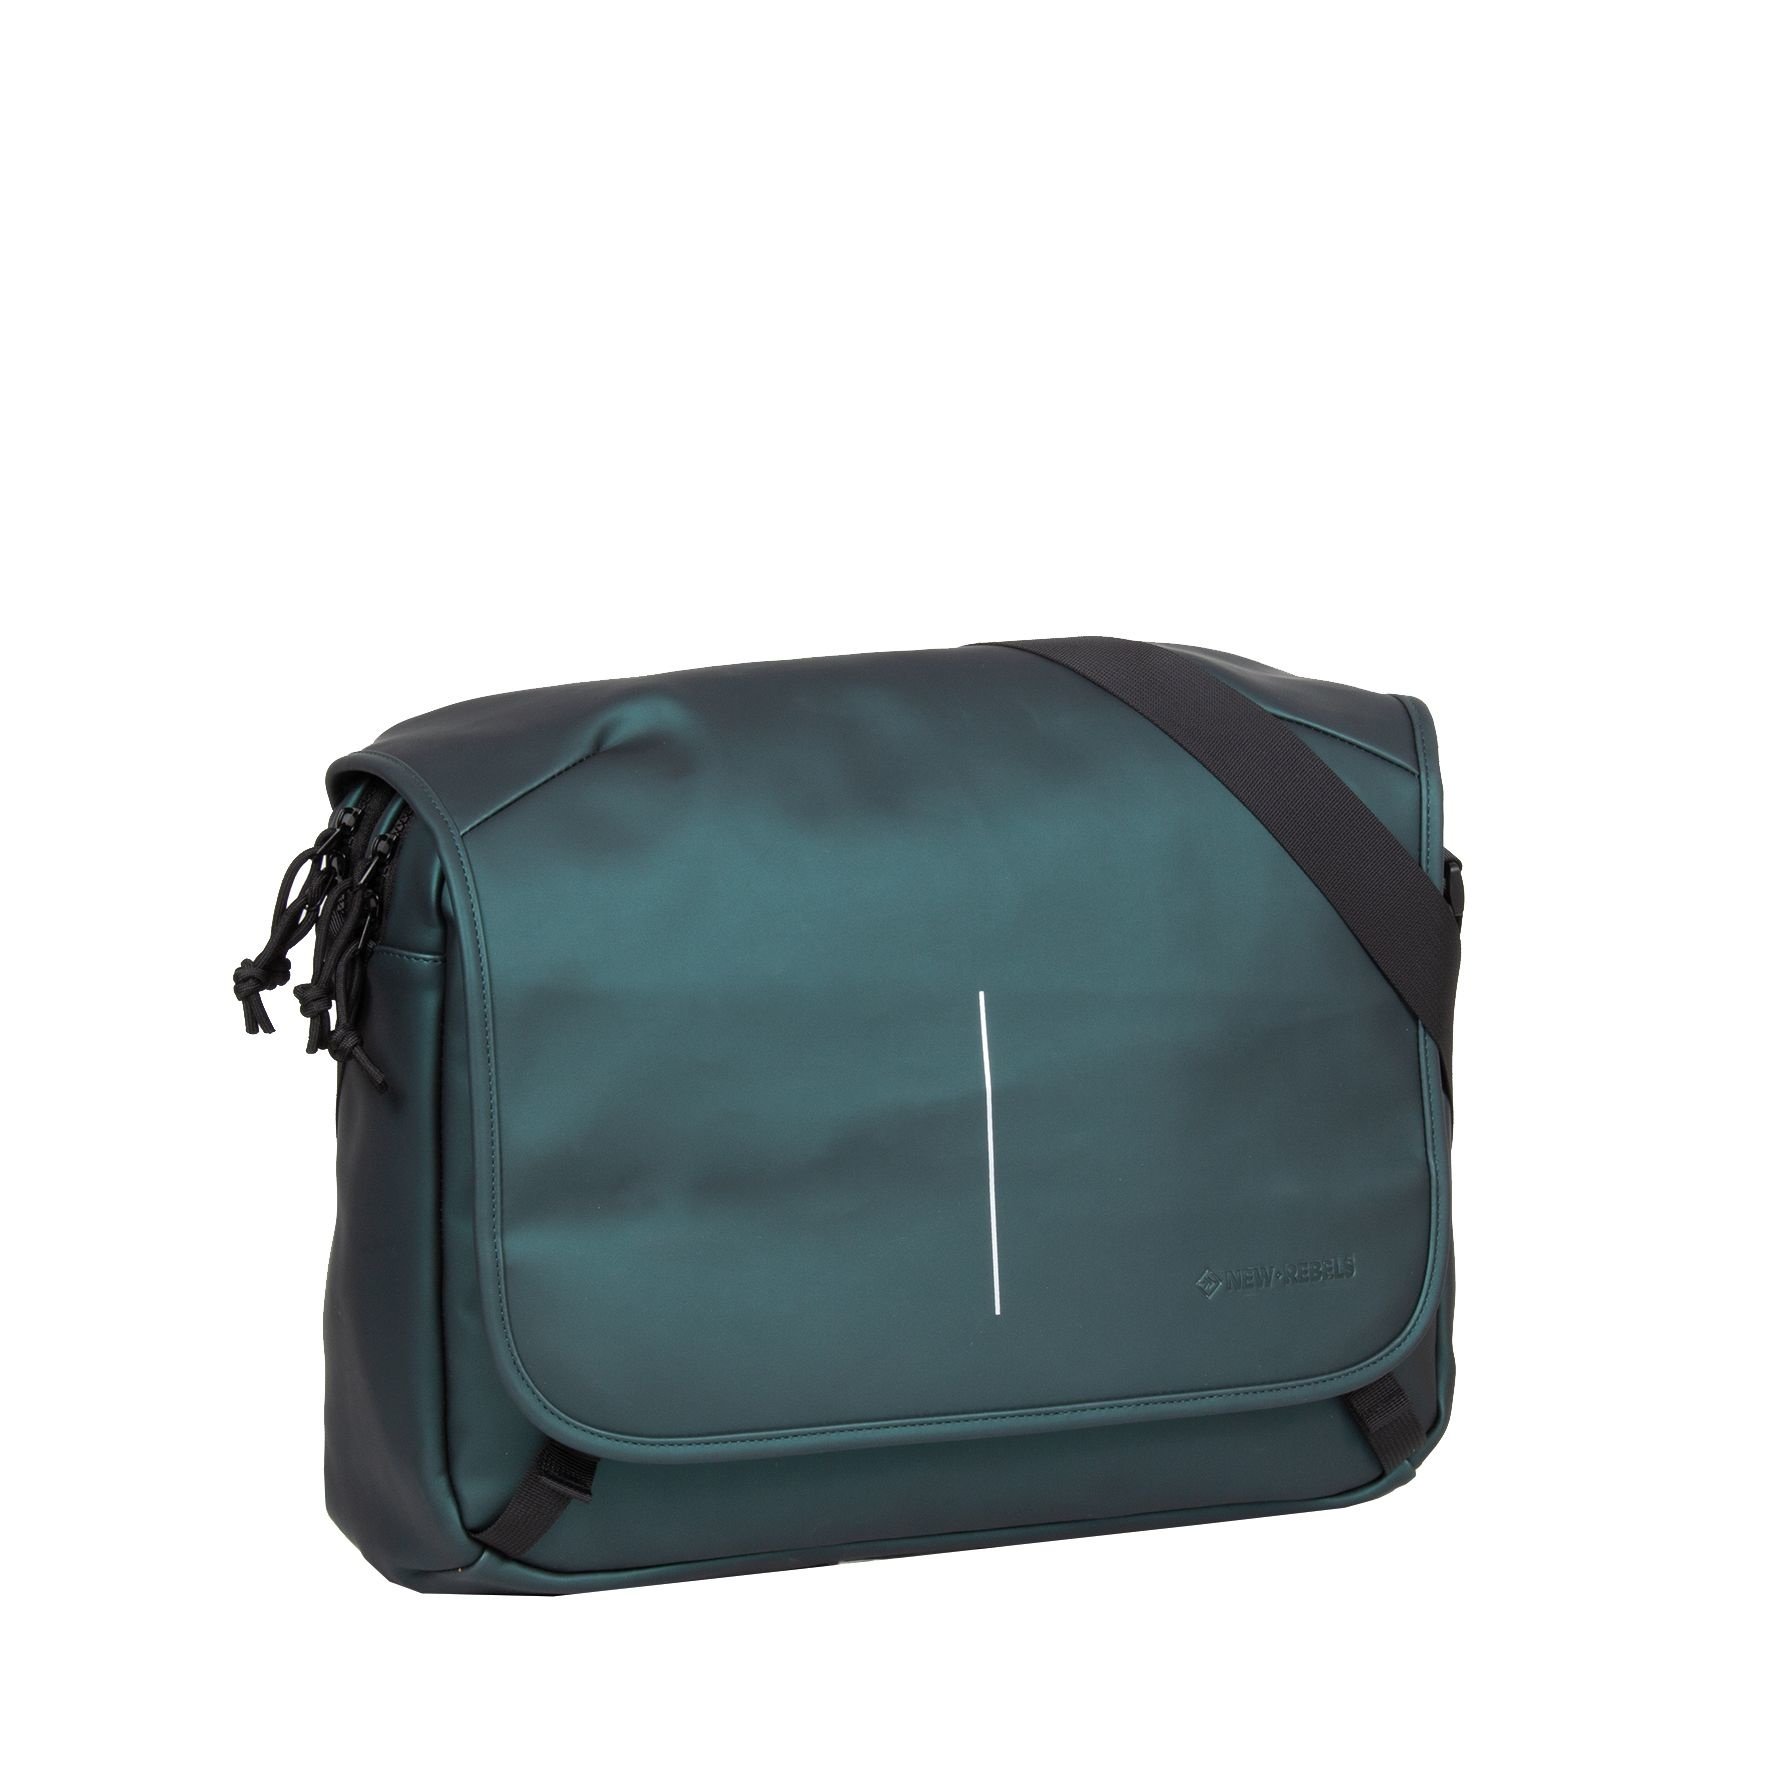 New Rebels William - Shoulder Bag - Donker Groen 10L - Waterafstotend